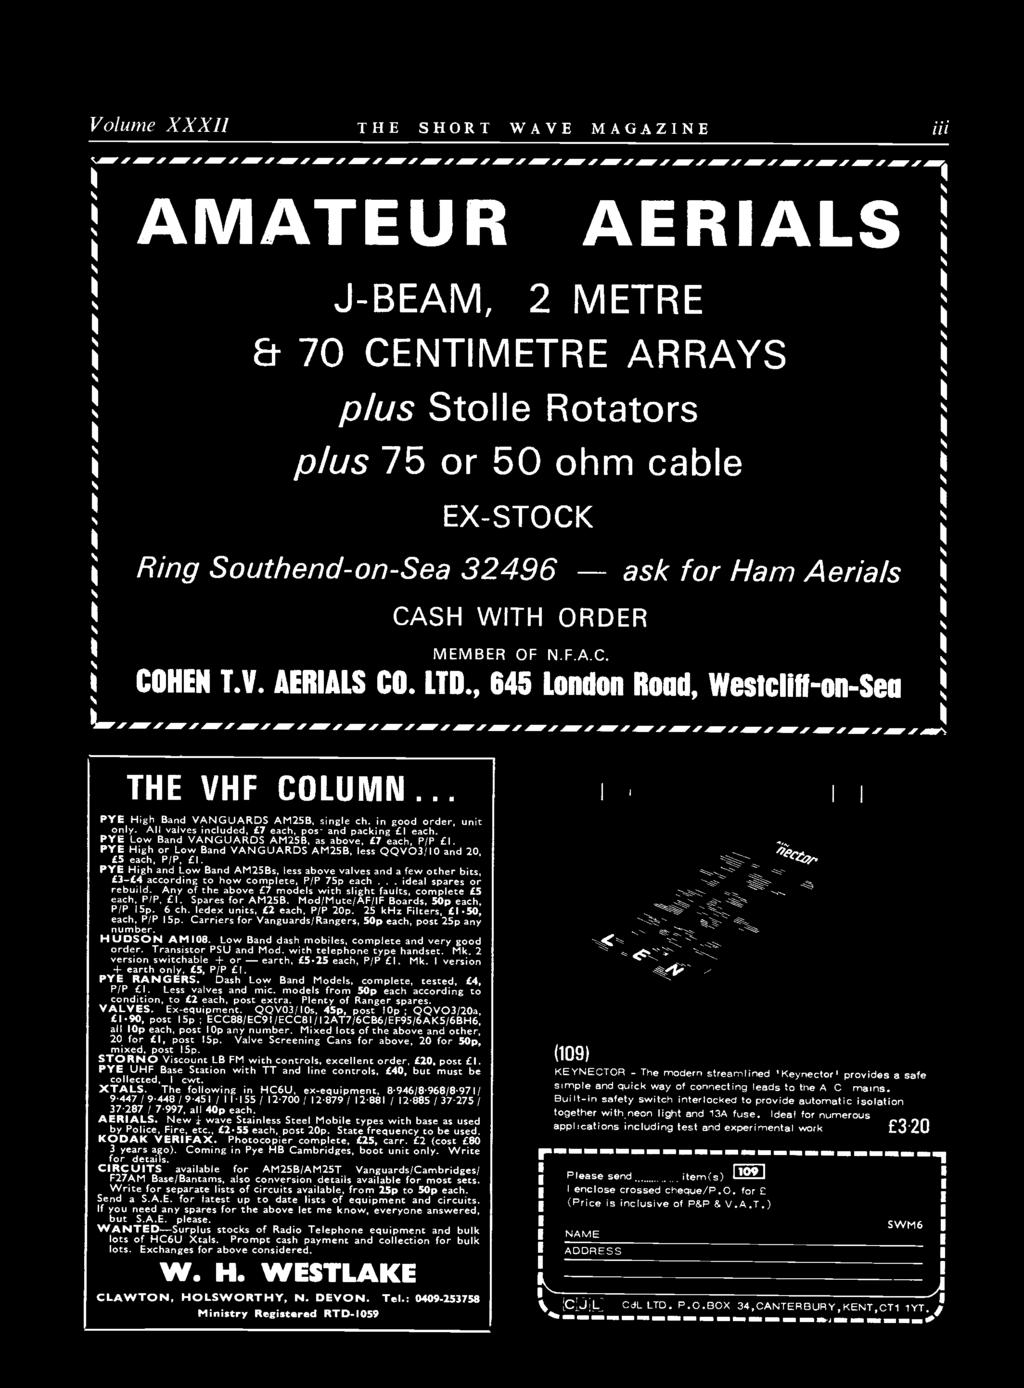 V. AERIALS CO. LTD., 645 London Road, Westcliff-on-Sea L4,I.4".1111,Ar./.4Mr/r/IM,,,,M,Ar.alr'/AIIIII.IAW/.=,./41111/..1, IOW AM,.or AM'.0 AM' THE VHF COLUMN... PYE High Band VANGUARDS AM258, single ch.